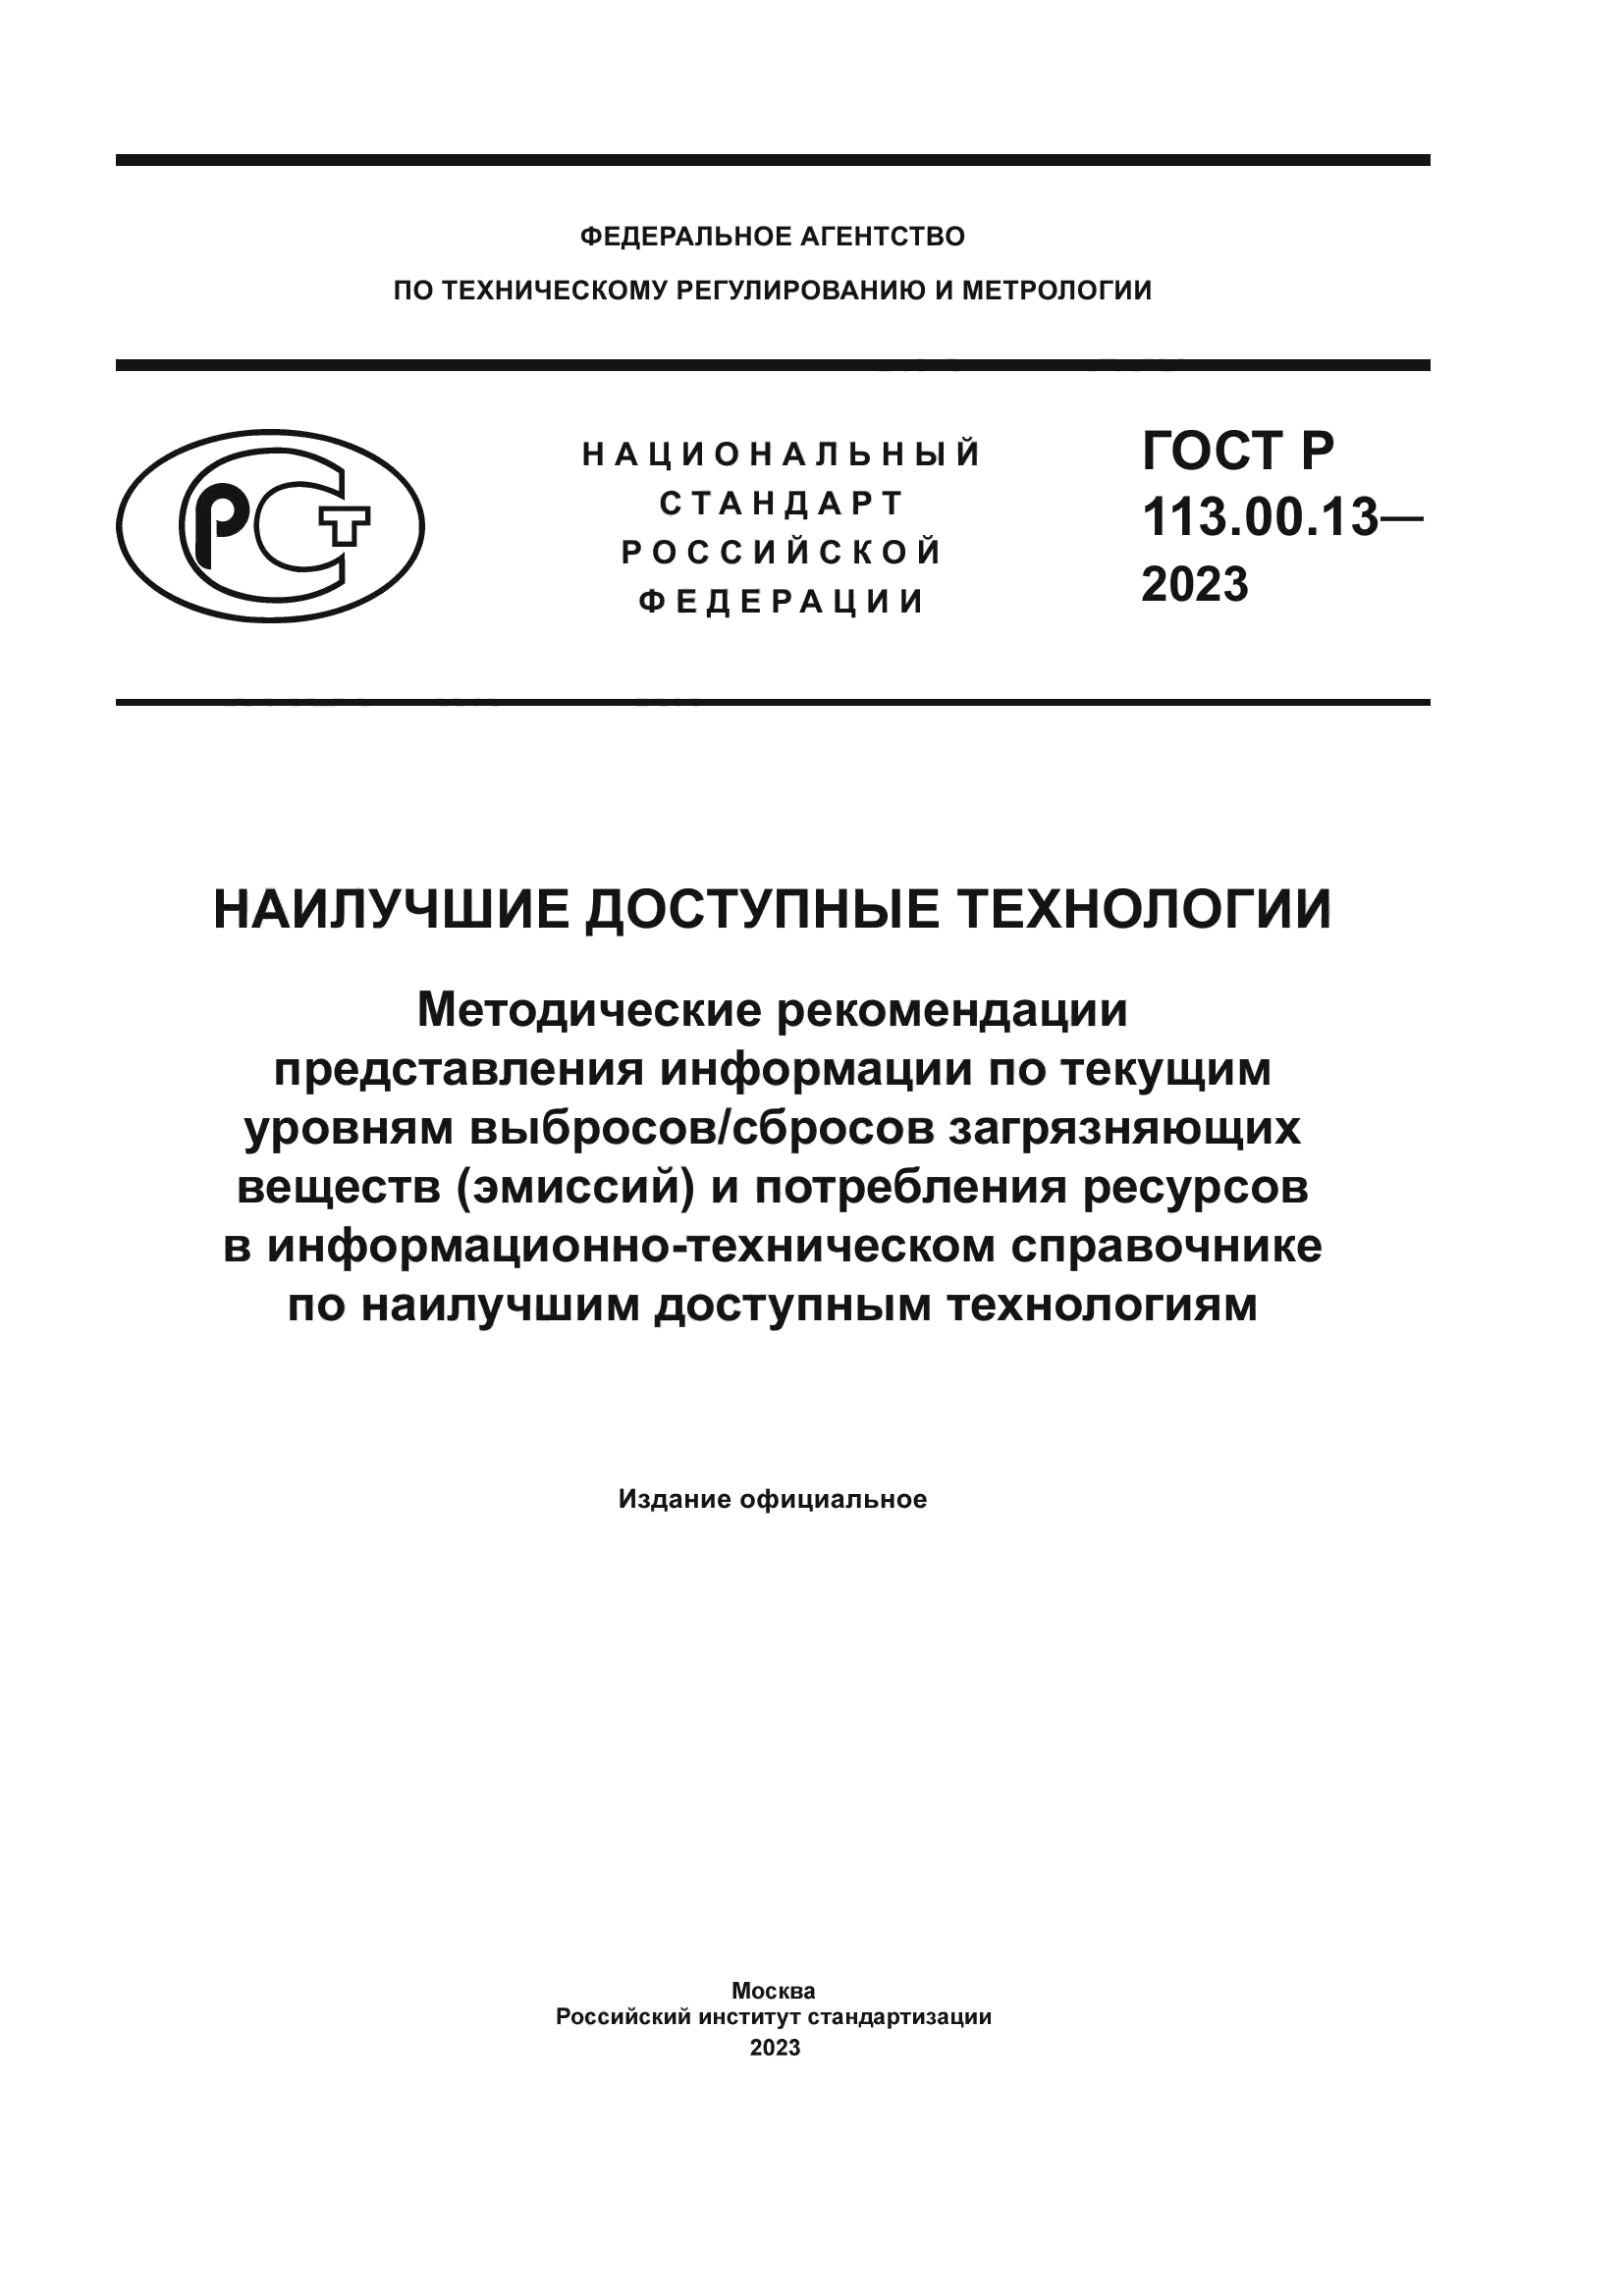 ГОСТ Р 113.00.13-2023